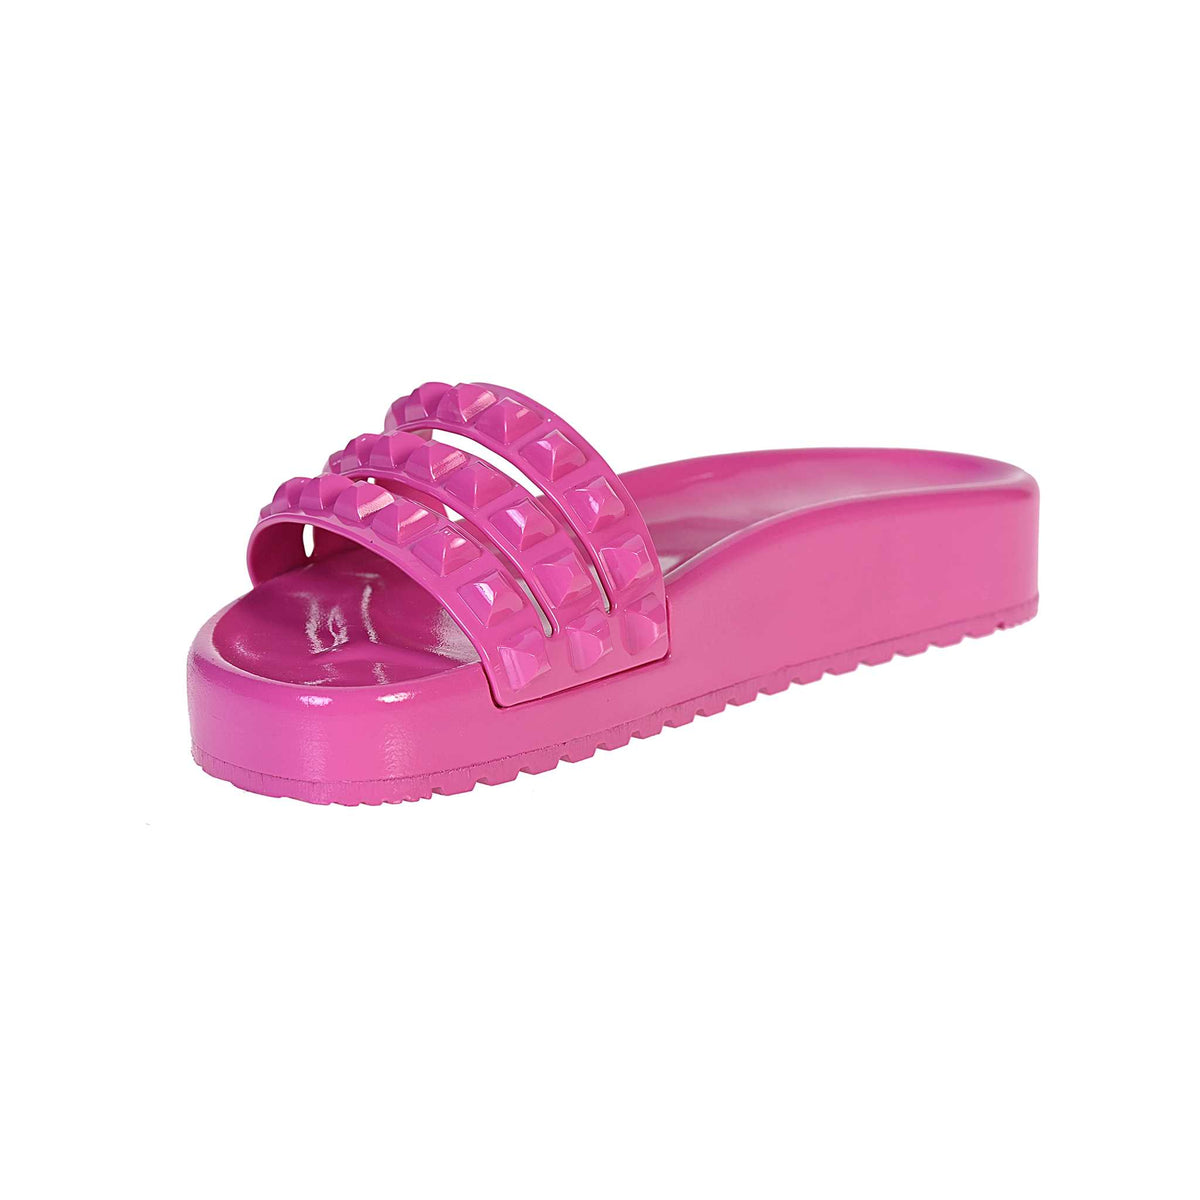 Fuchsia platform slides barbie look vacation sandals, Resort style shiny women sandals from Carmen Sol